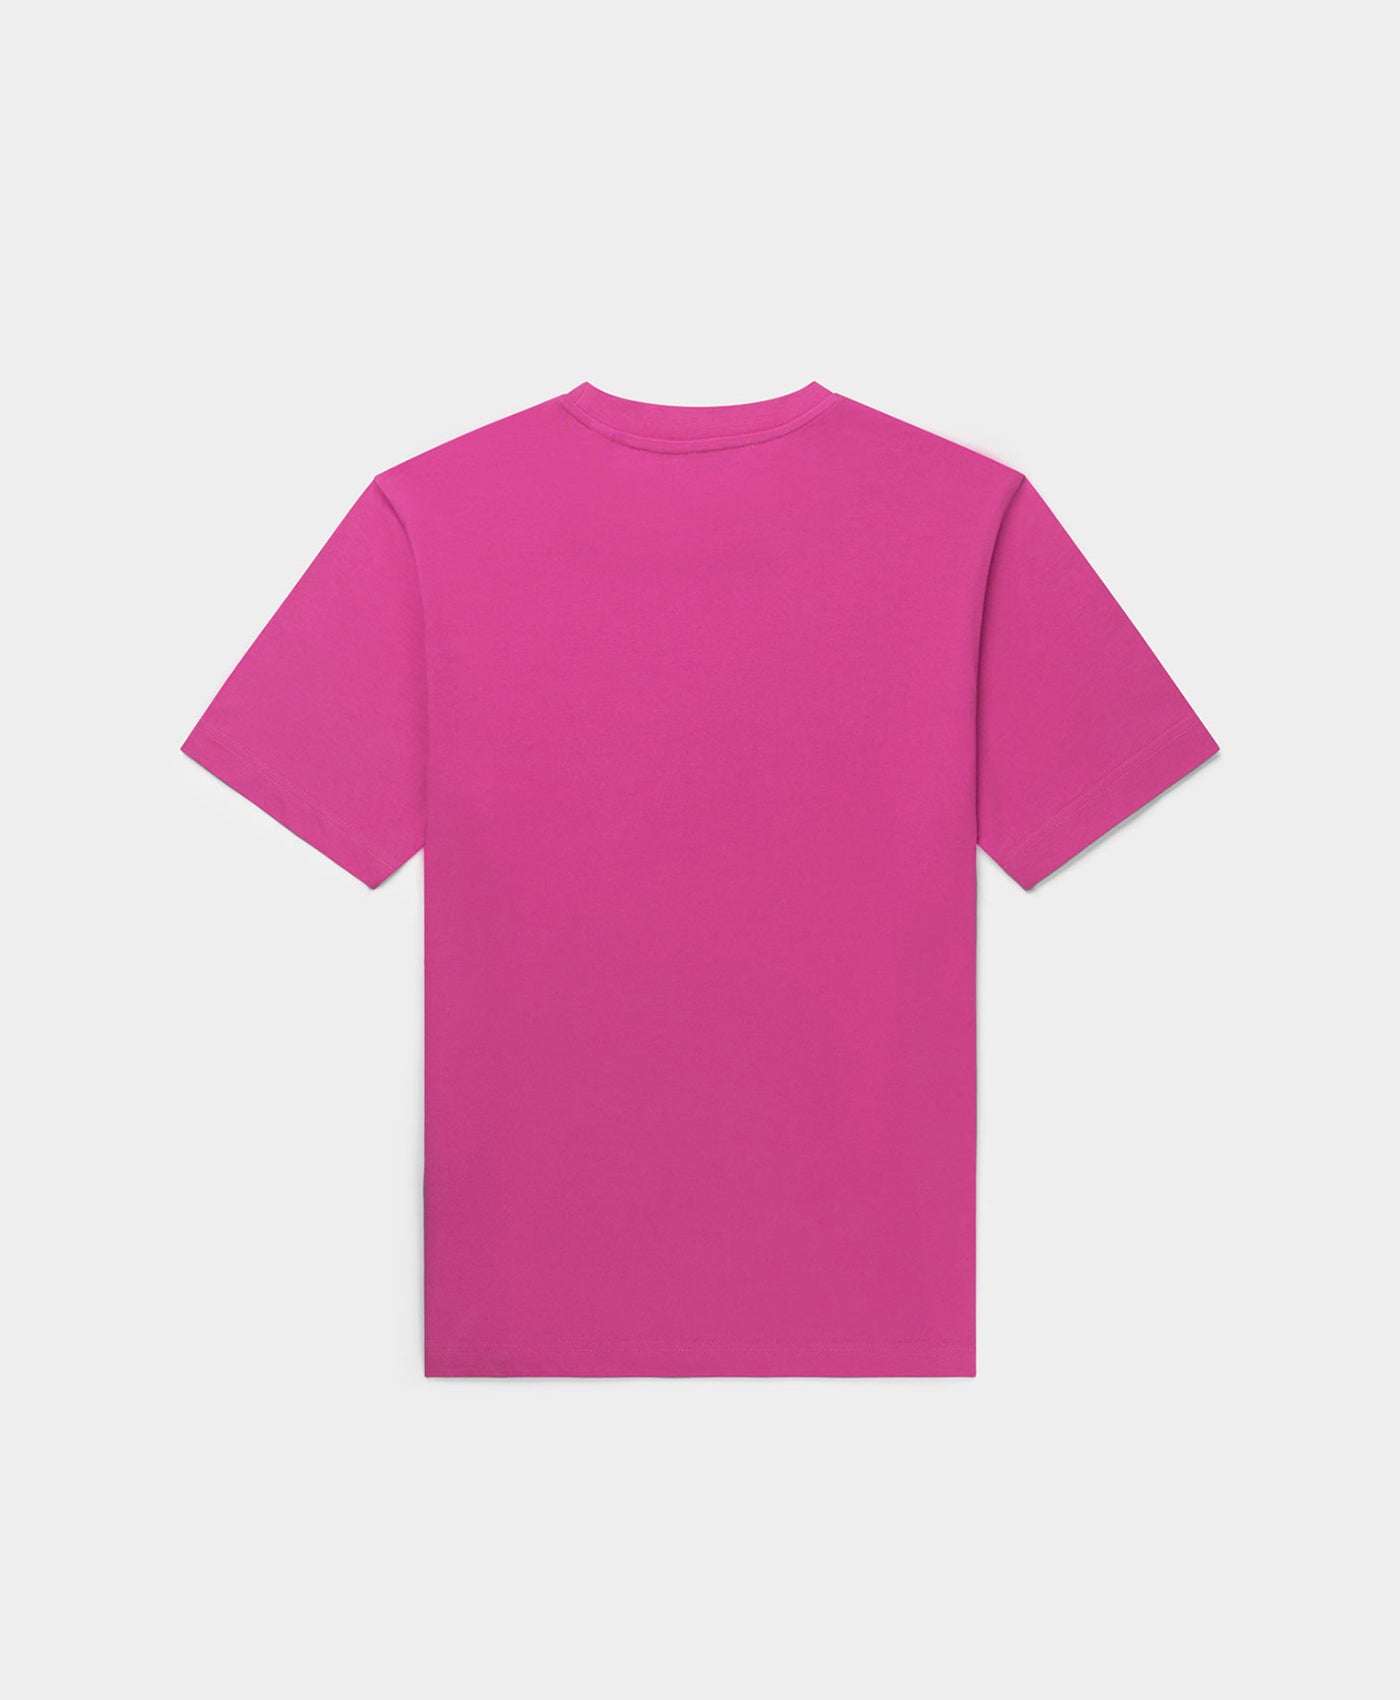 DP - Very Berry Pink Esy T-Shirt - Packshot - Rear